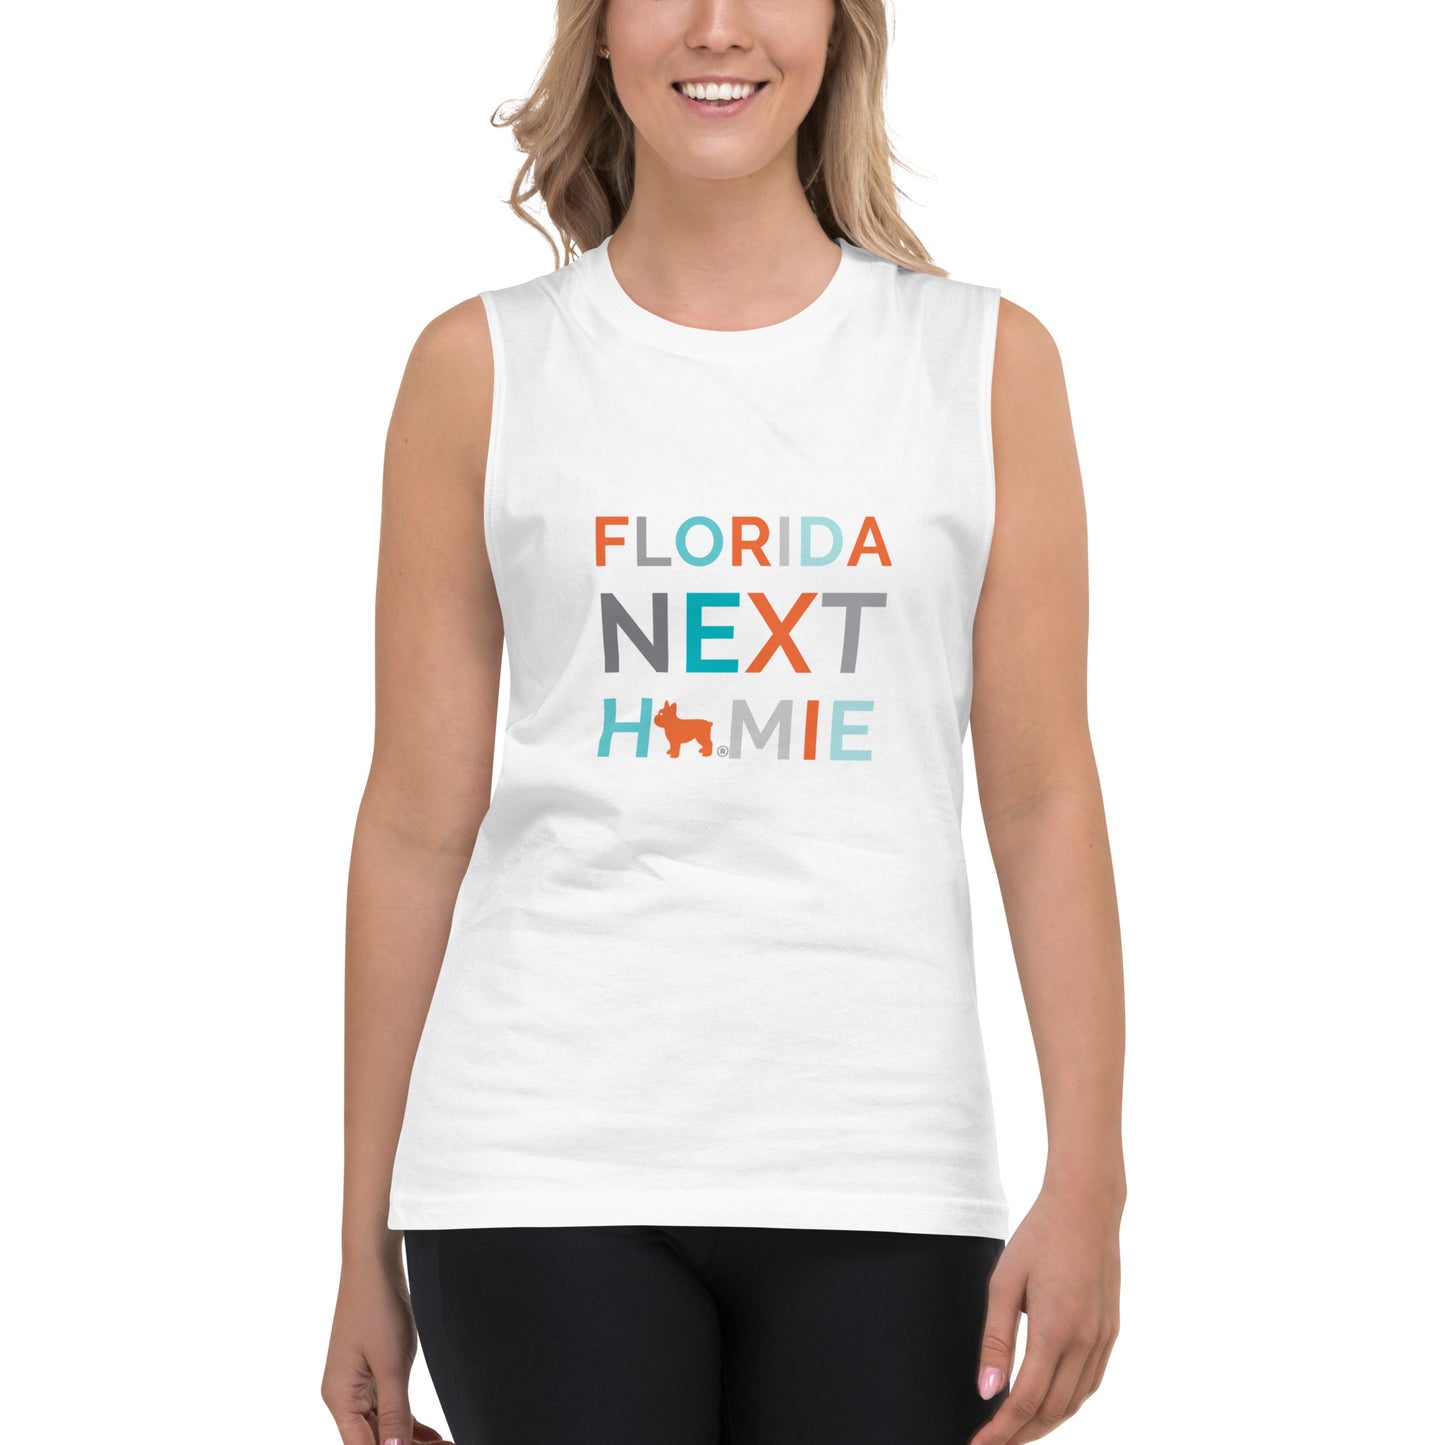 Florida NextHomie Muscle Shirt